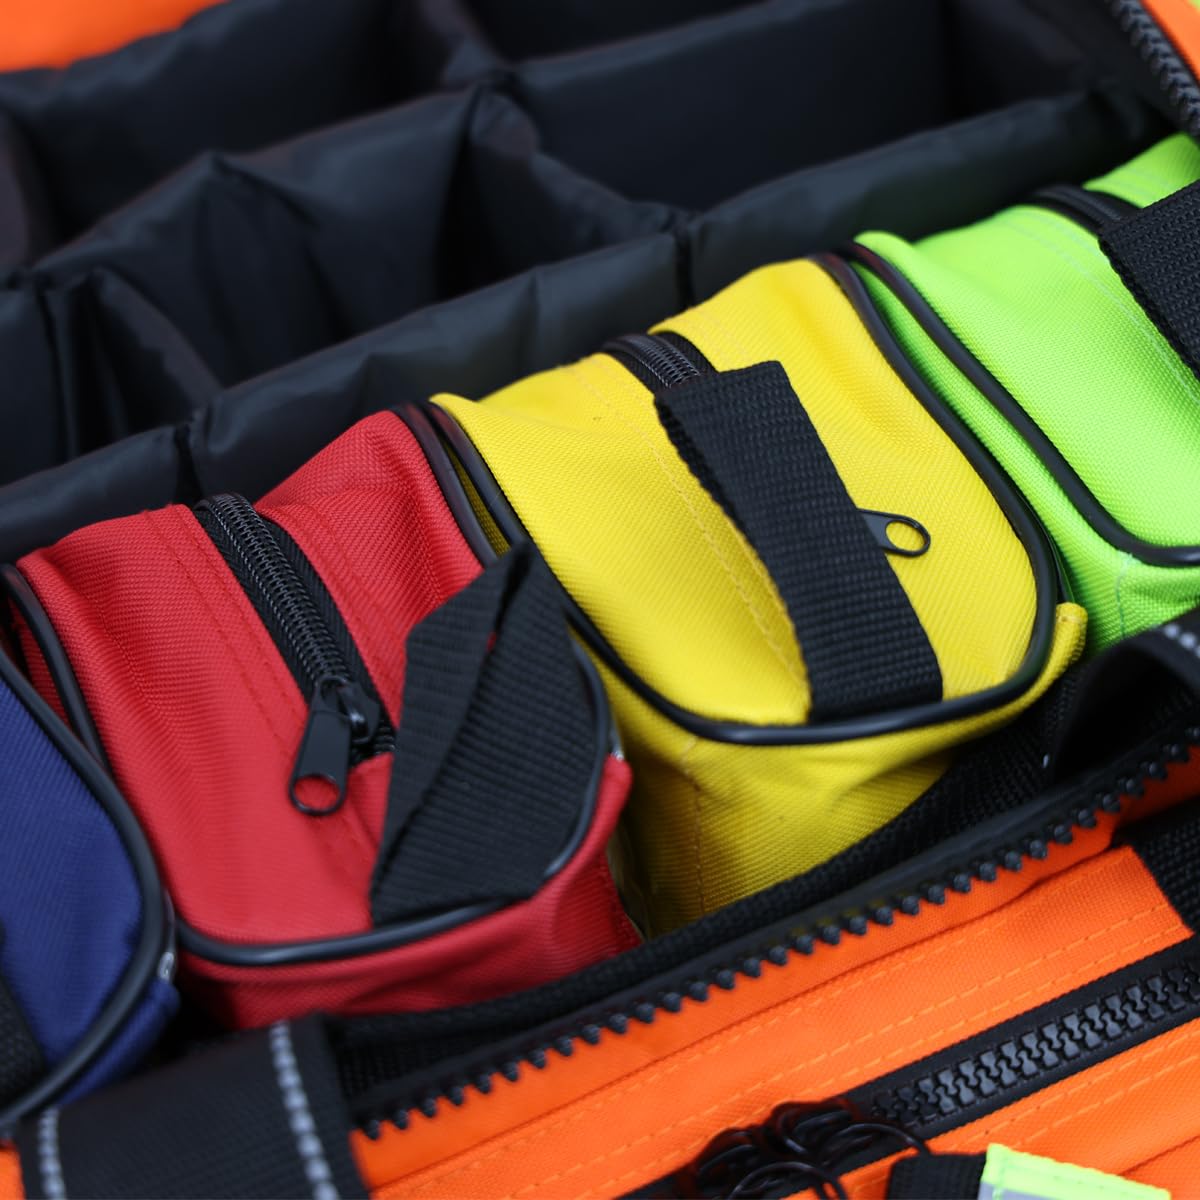 Lightning X Premium Pre-Filled Modular EMS/EMT Trauma Medical Bag | Fully Stocked First Responder Kit - Orange